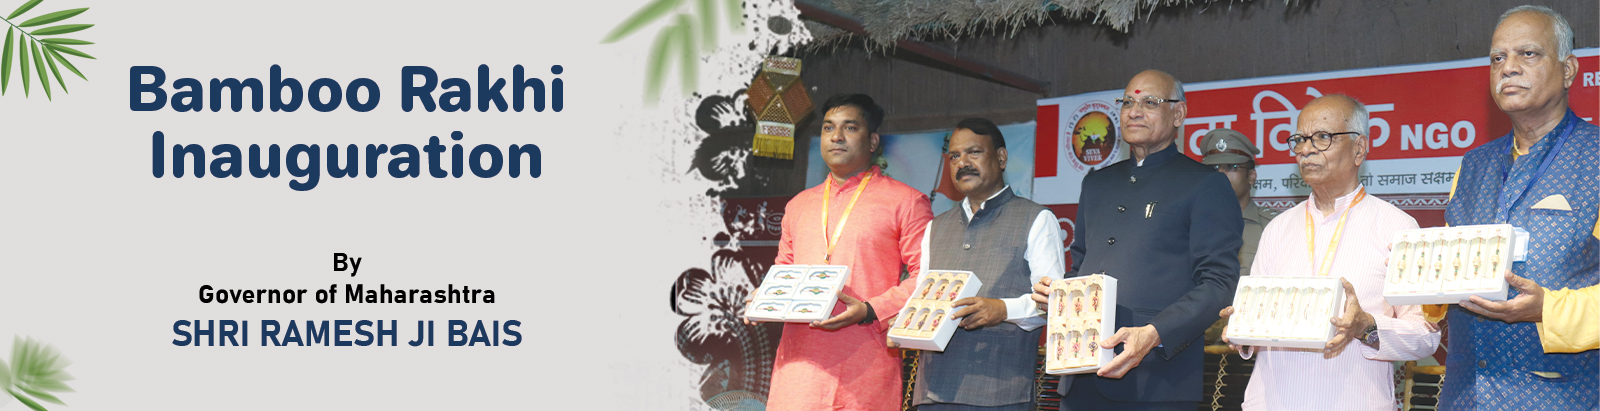 Governor of Maharashtra Shri Ramesh Ji Bais and Dignitaries Launch Bamboo Rakhis for this year's Rakshabandhan Celebration.